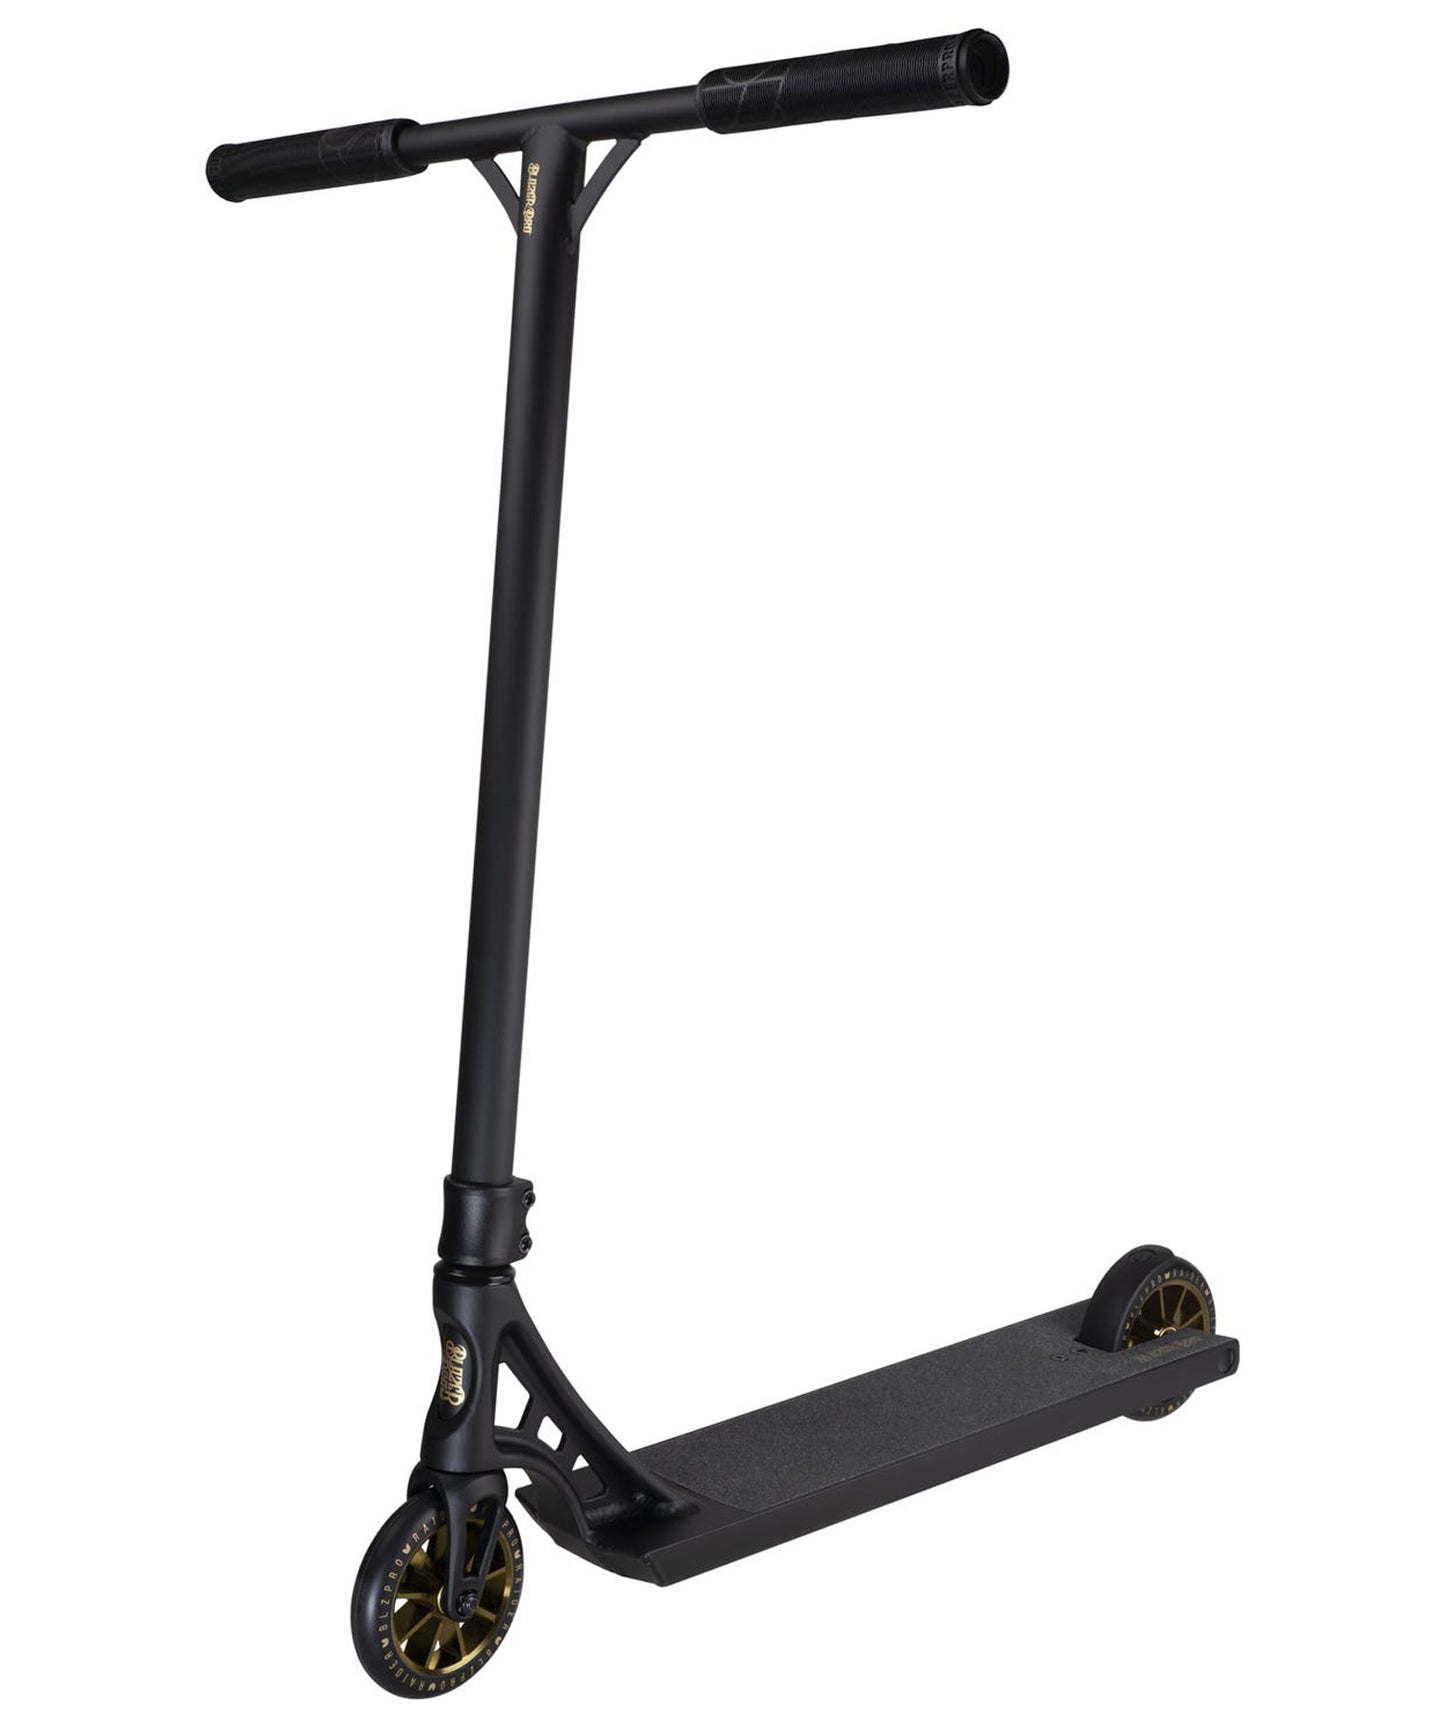 blazer-pro-scooter-completo-raider-color-negro-oro-aluminio-de-calidad-robusto-y-ligero-a-la-vez-gama-alta-totalmente-profesional.